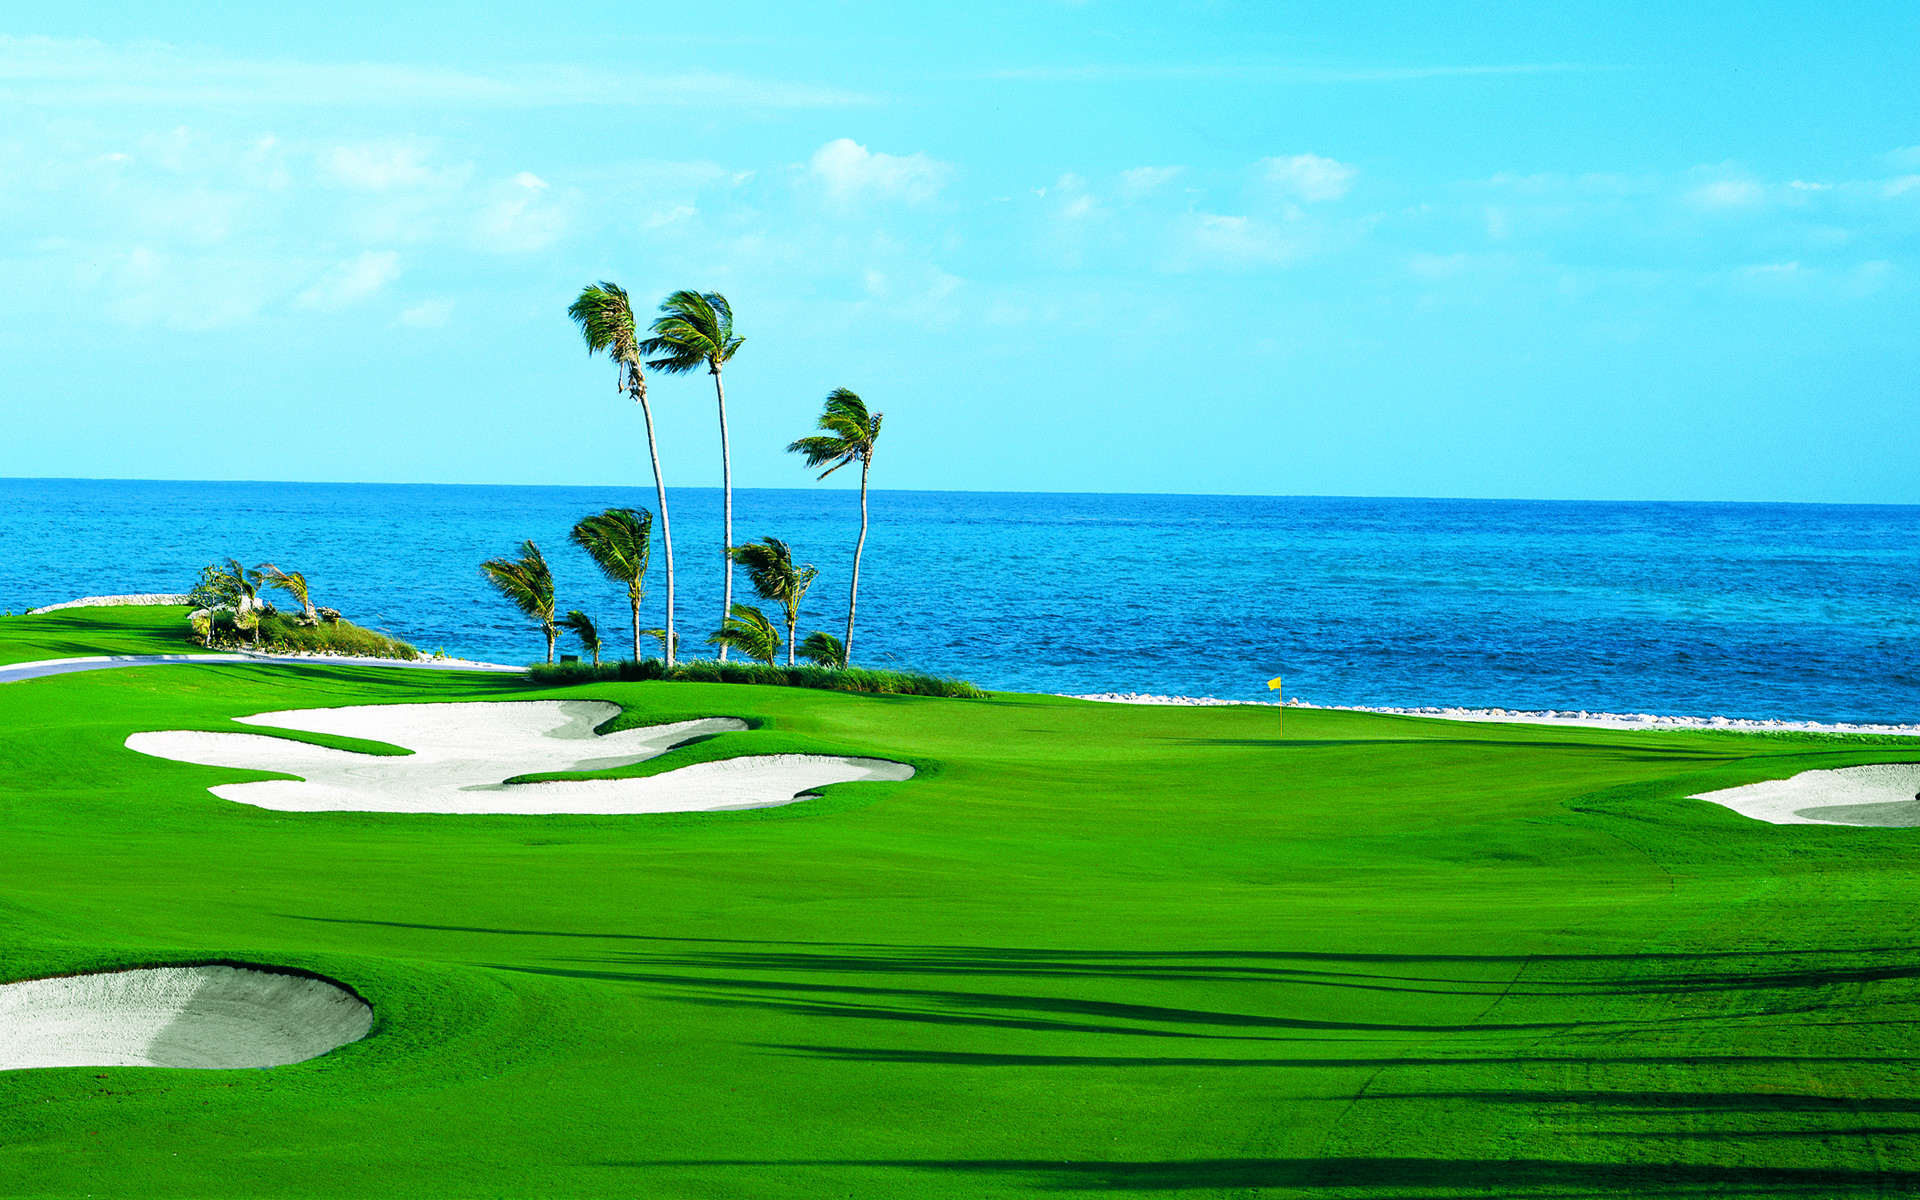 HD Golf Wallpaper Image